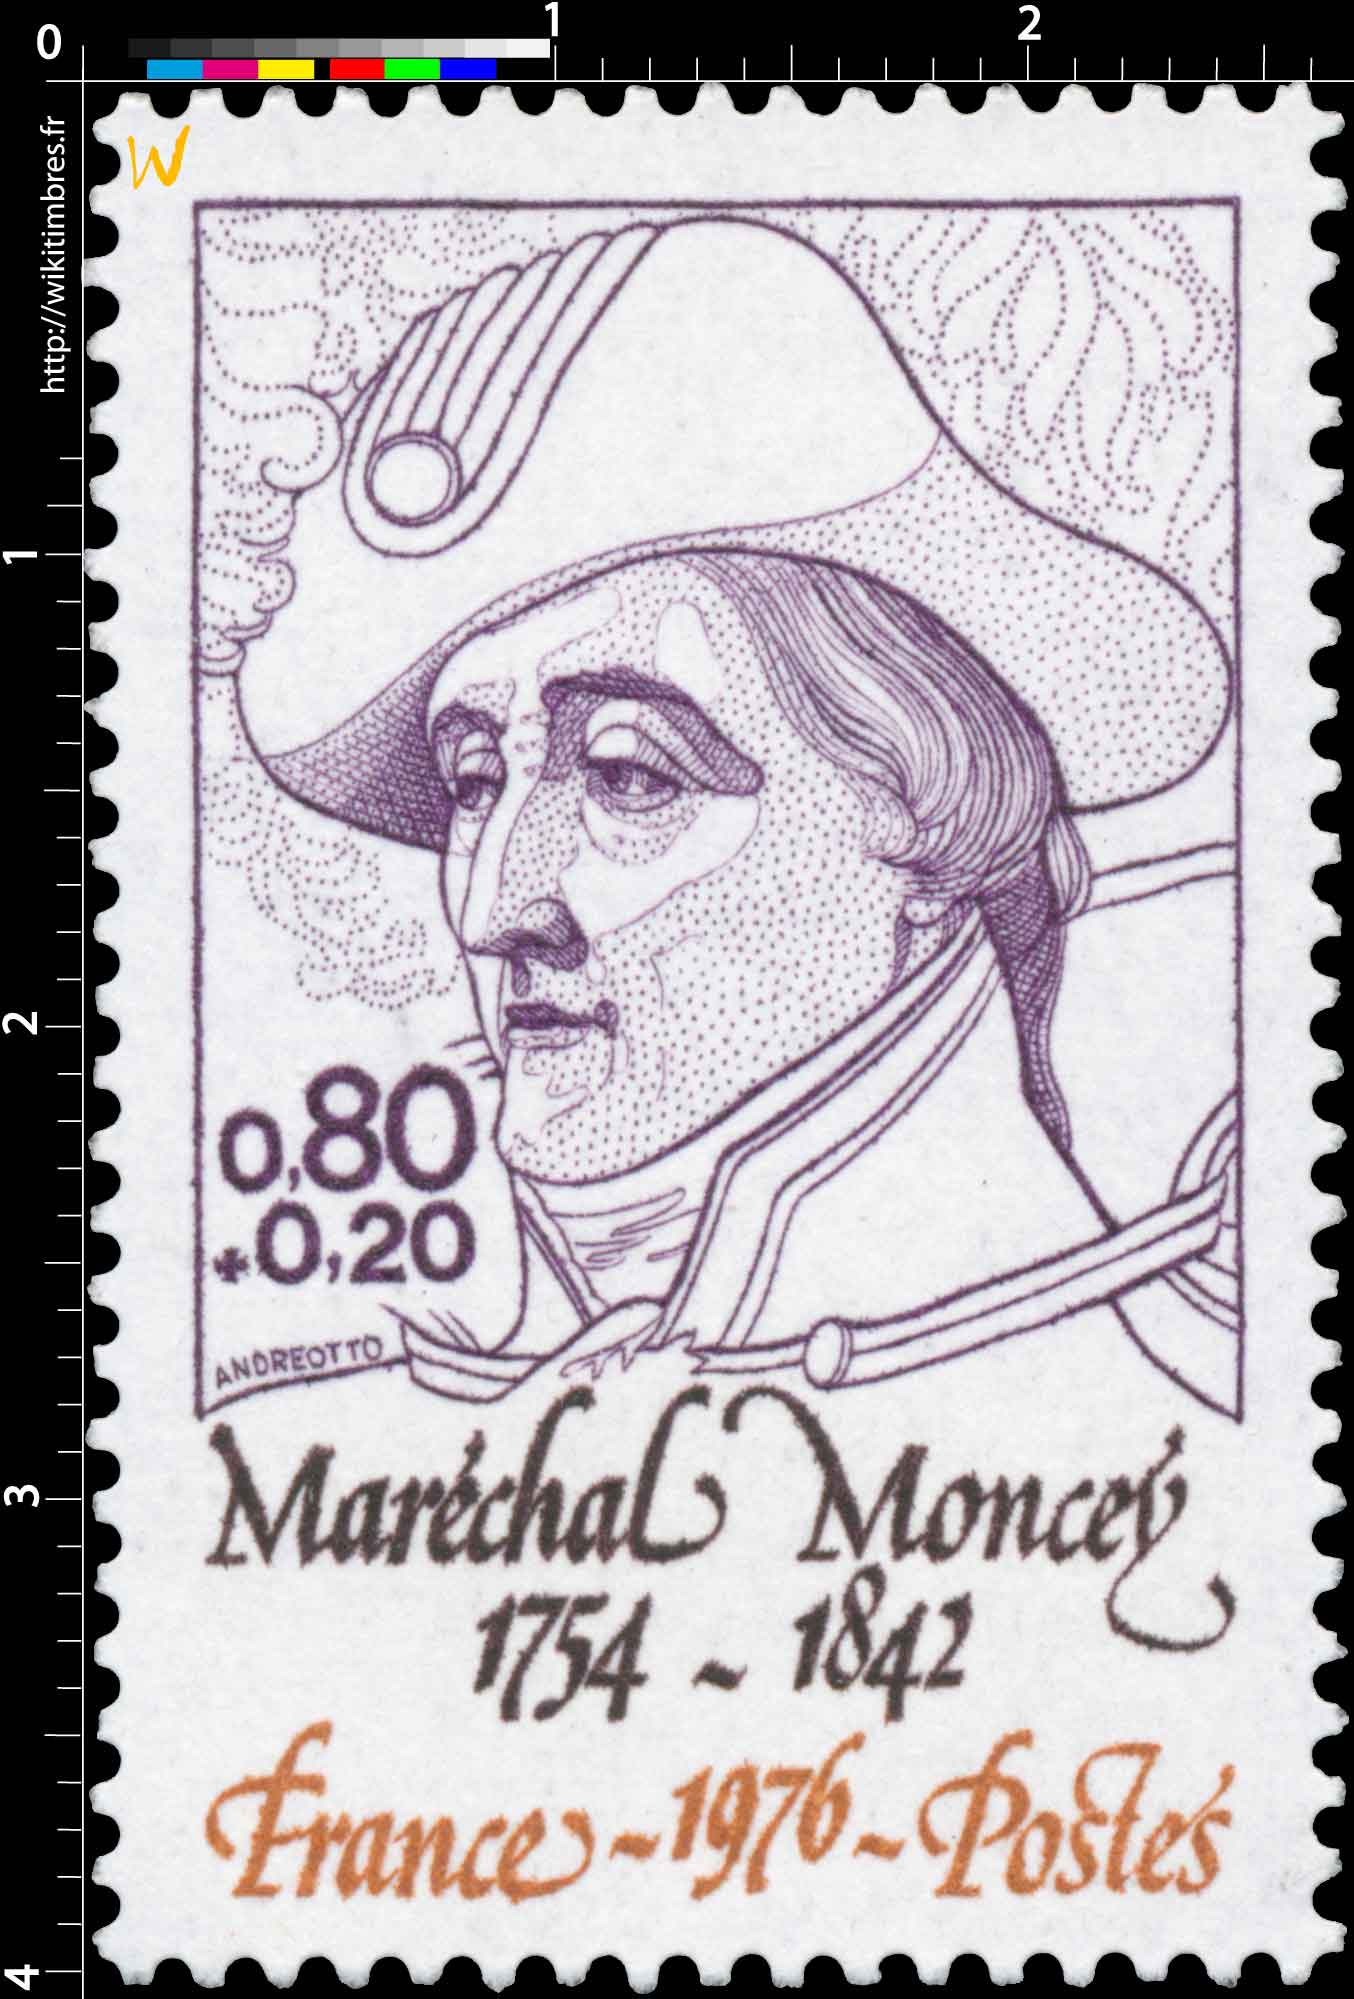 1976 Maréchal Moncey 1754-1842